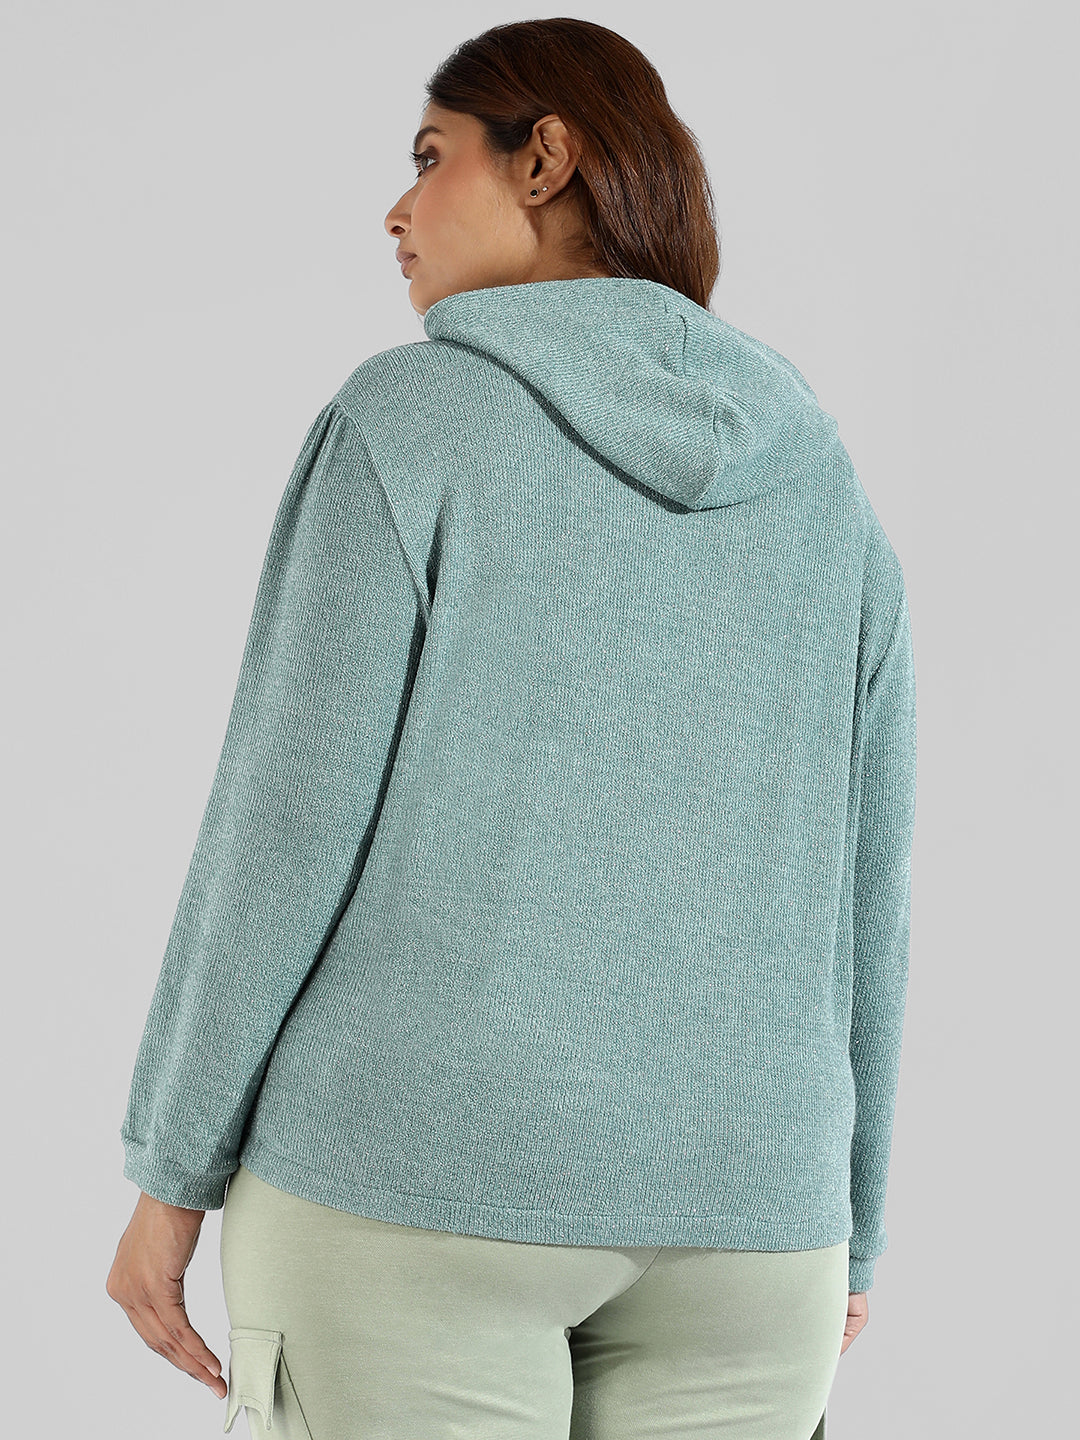 Solid Stylish Hooded Sweatshirts